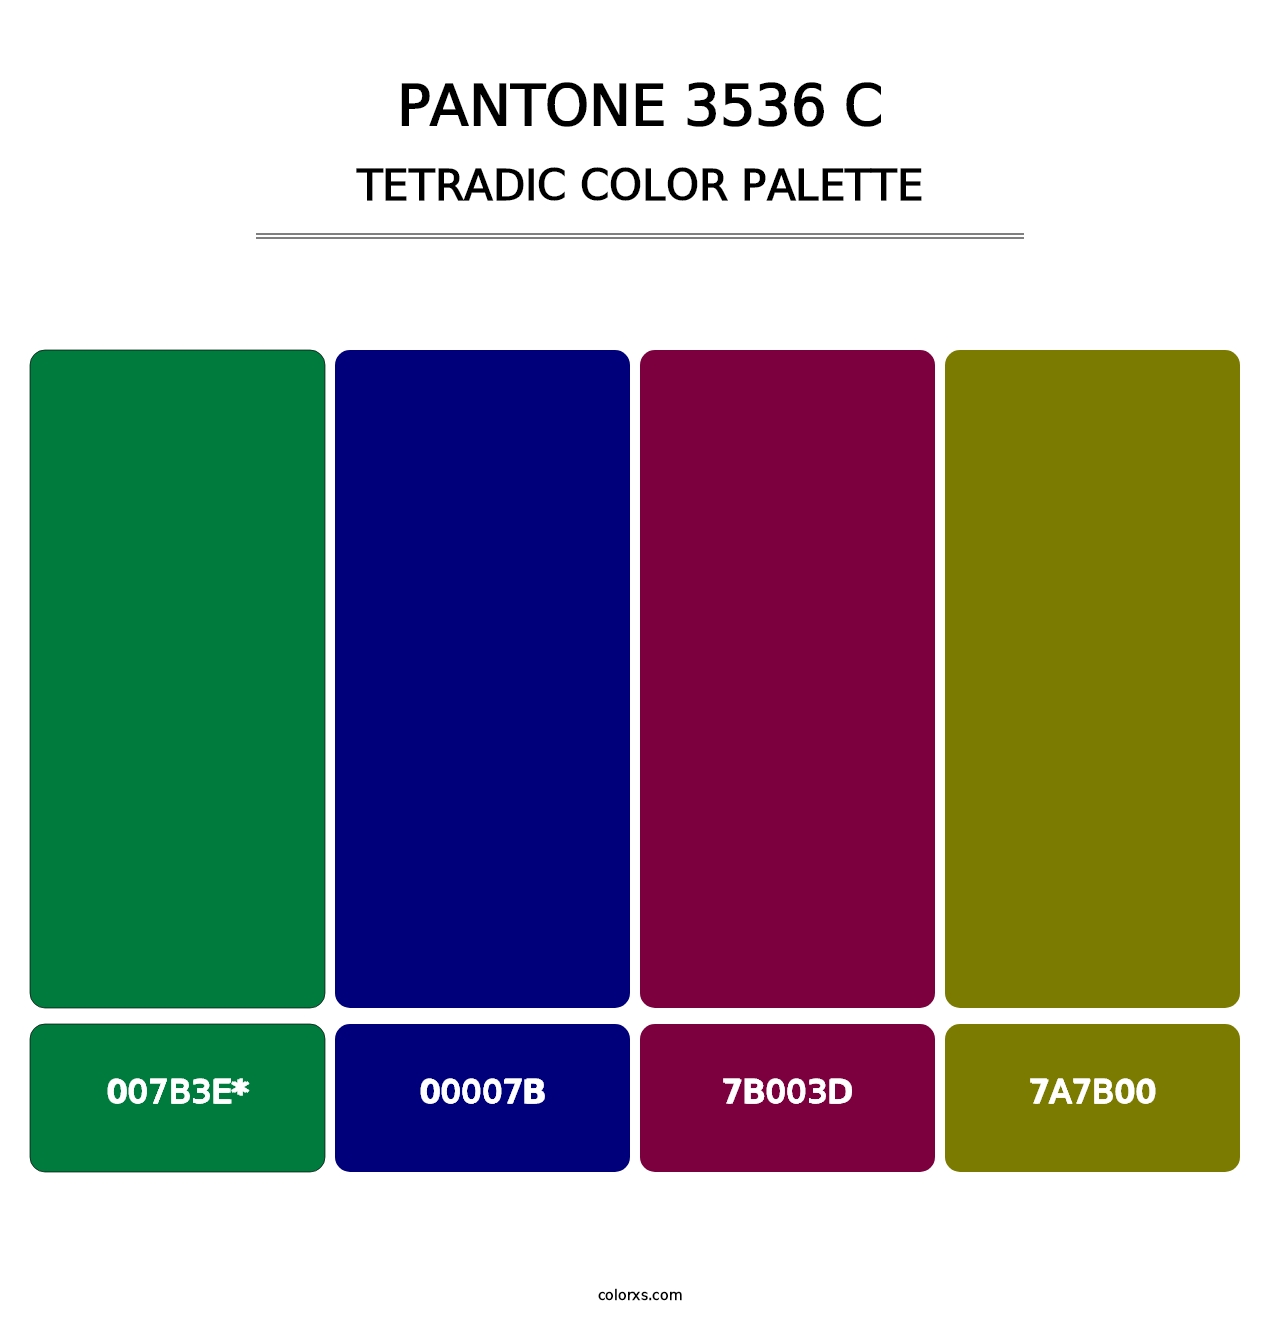 PANTONE 3536 C - Tetradic Color Palette